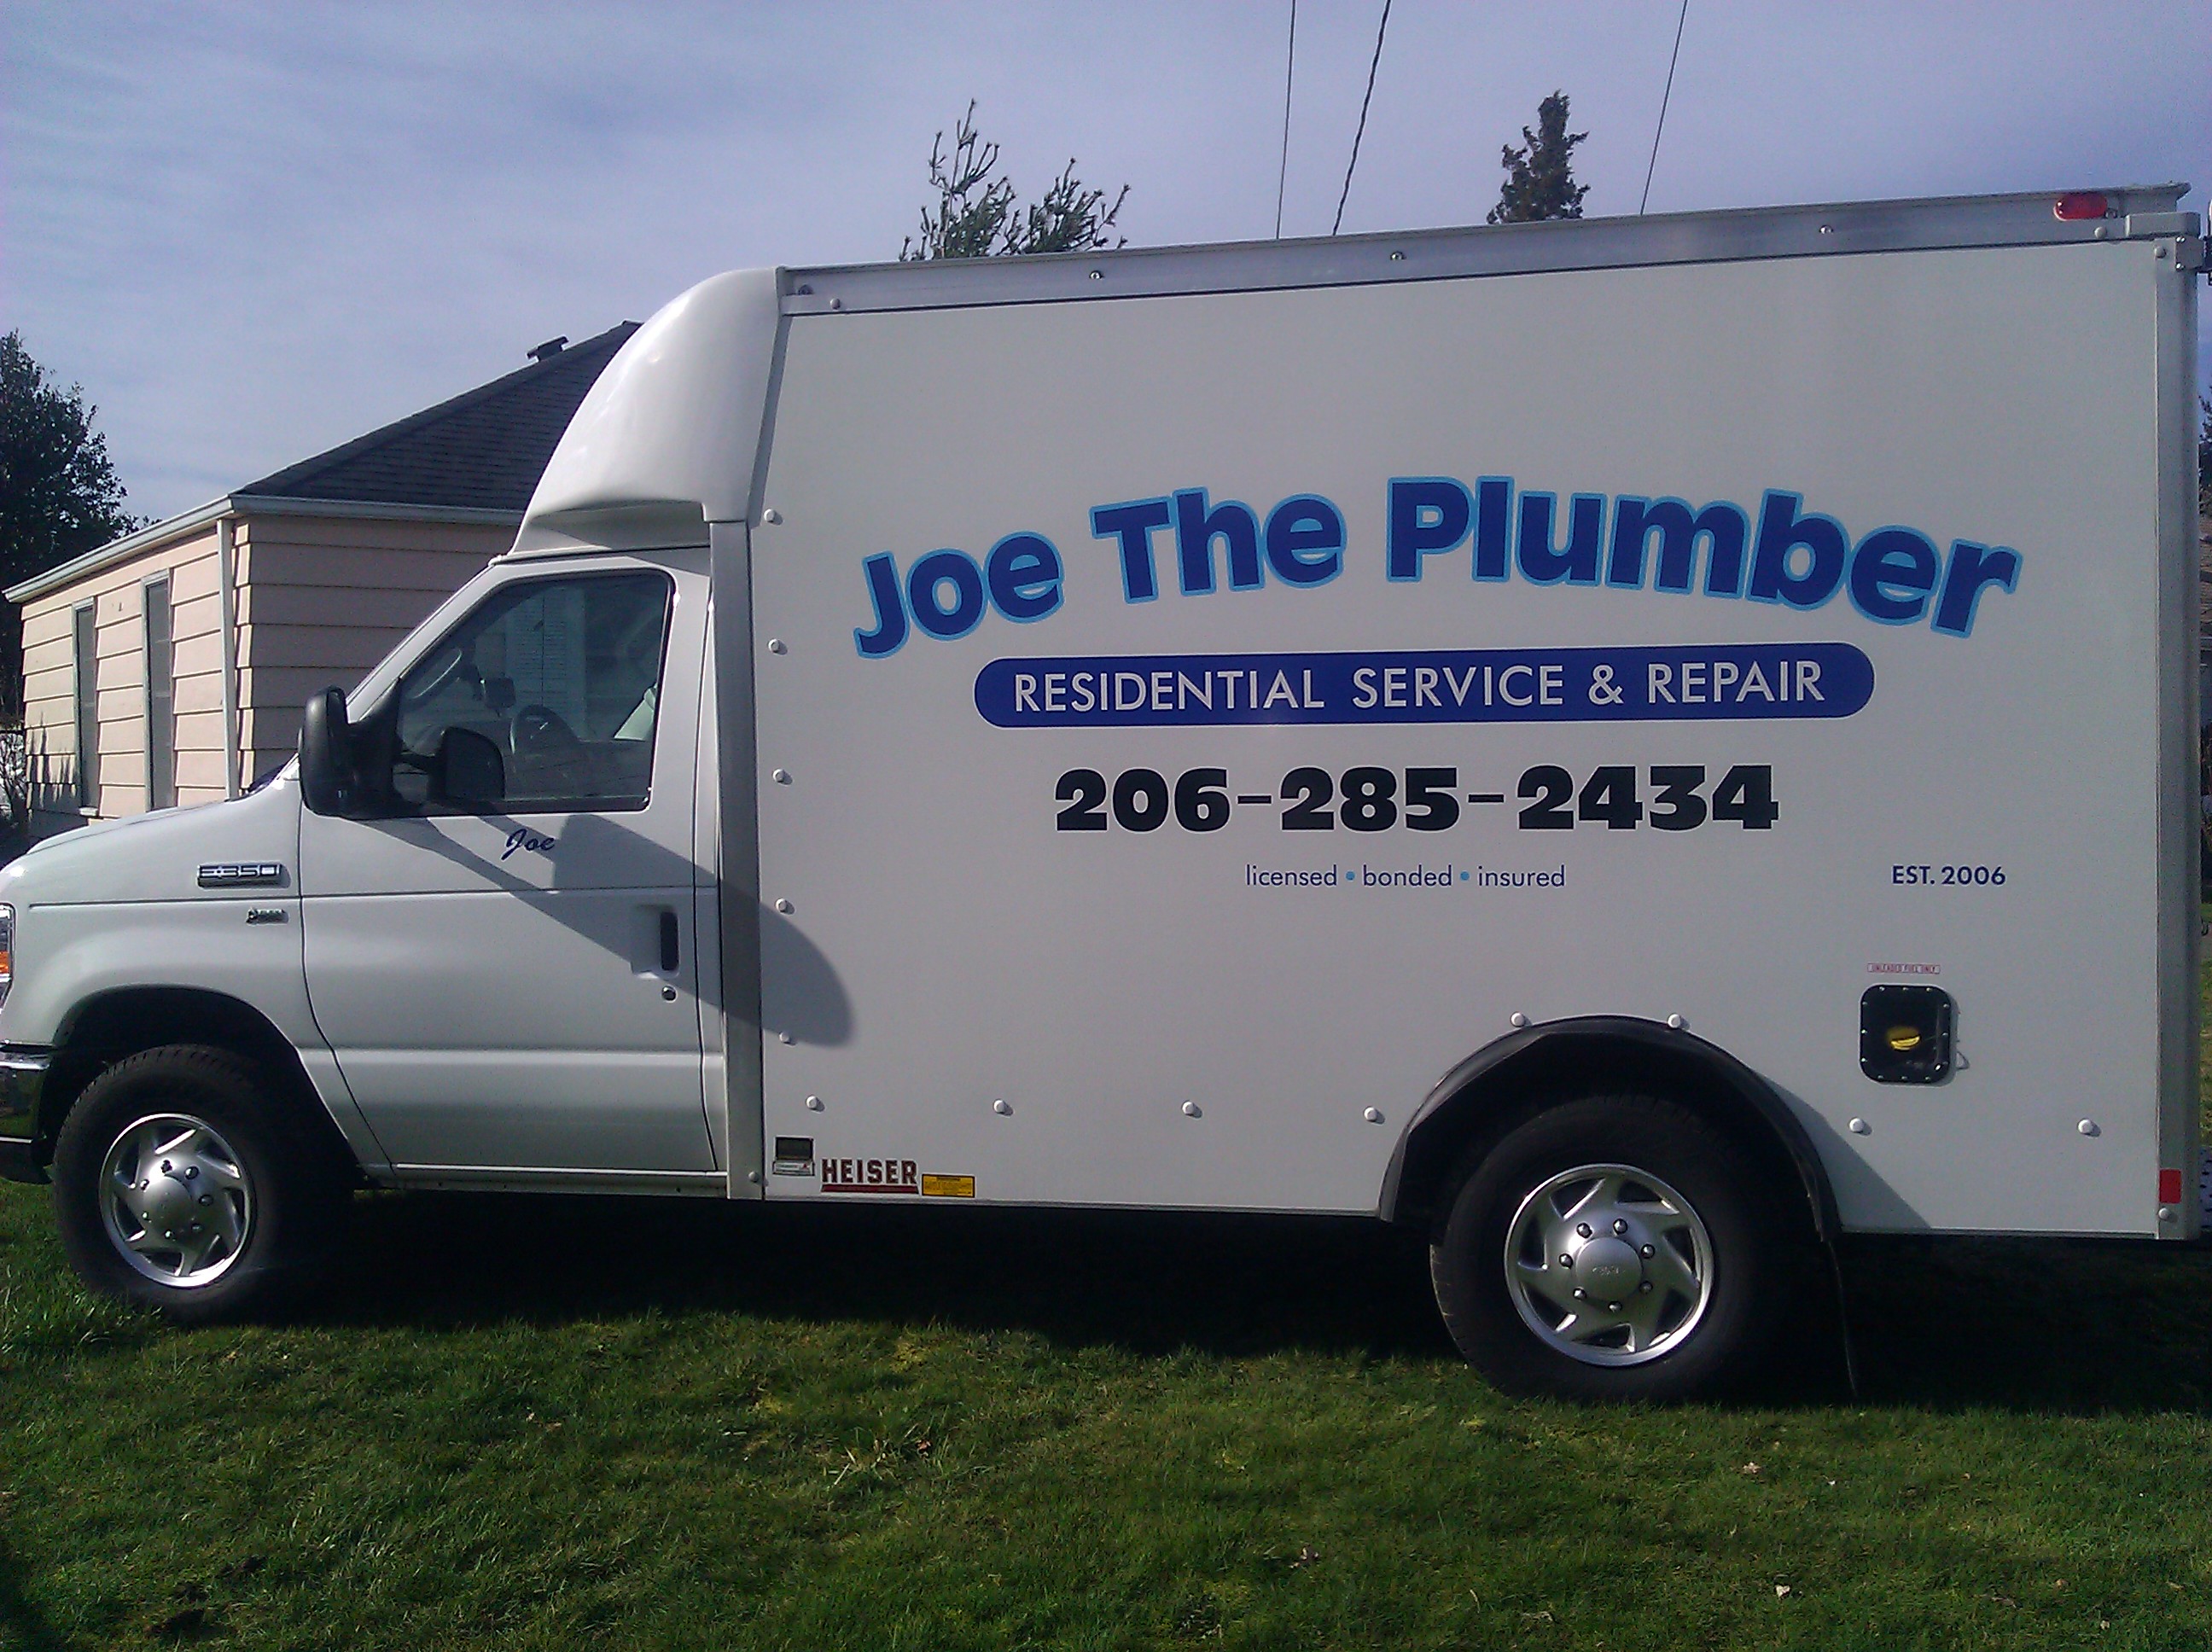 Joe the Plumber 17011 34th Ave S, SeaTac Washington 98188